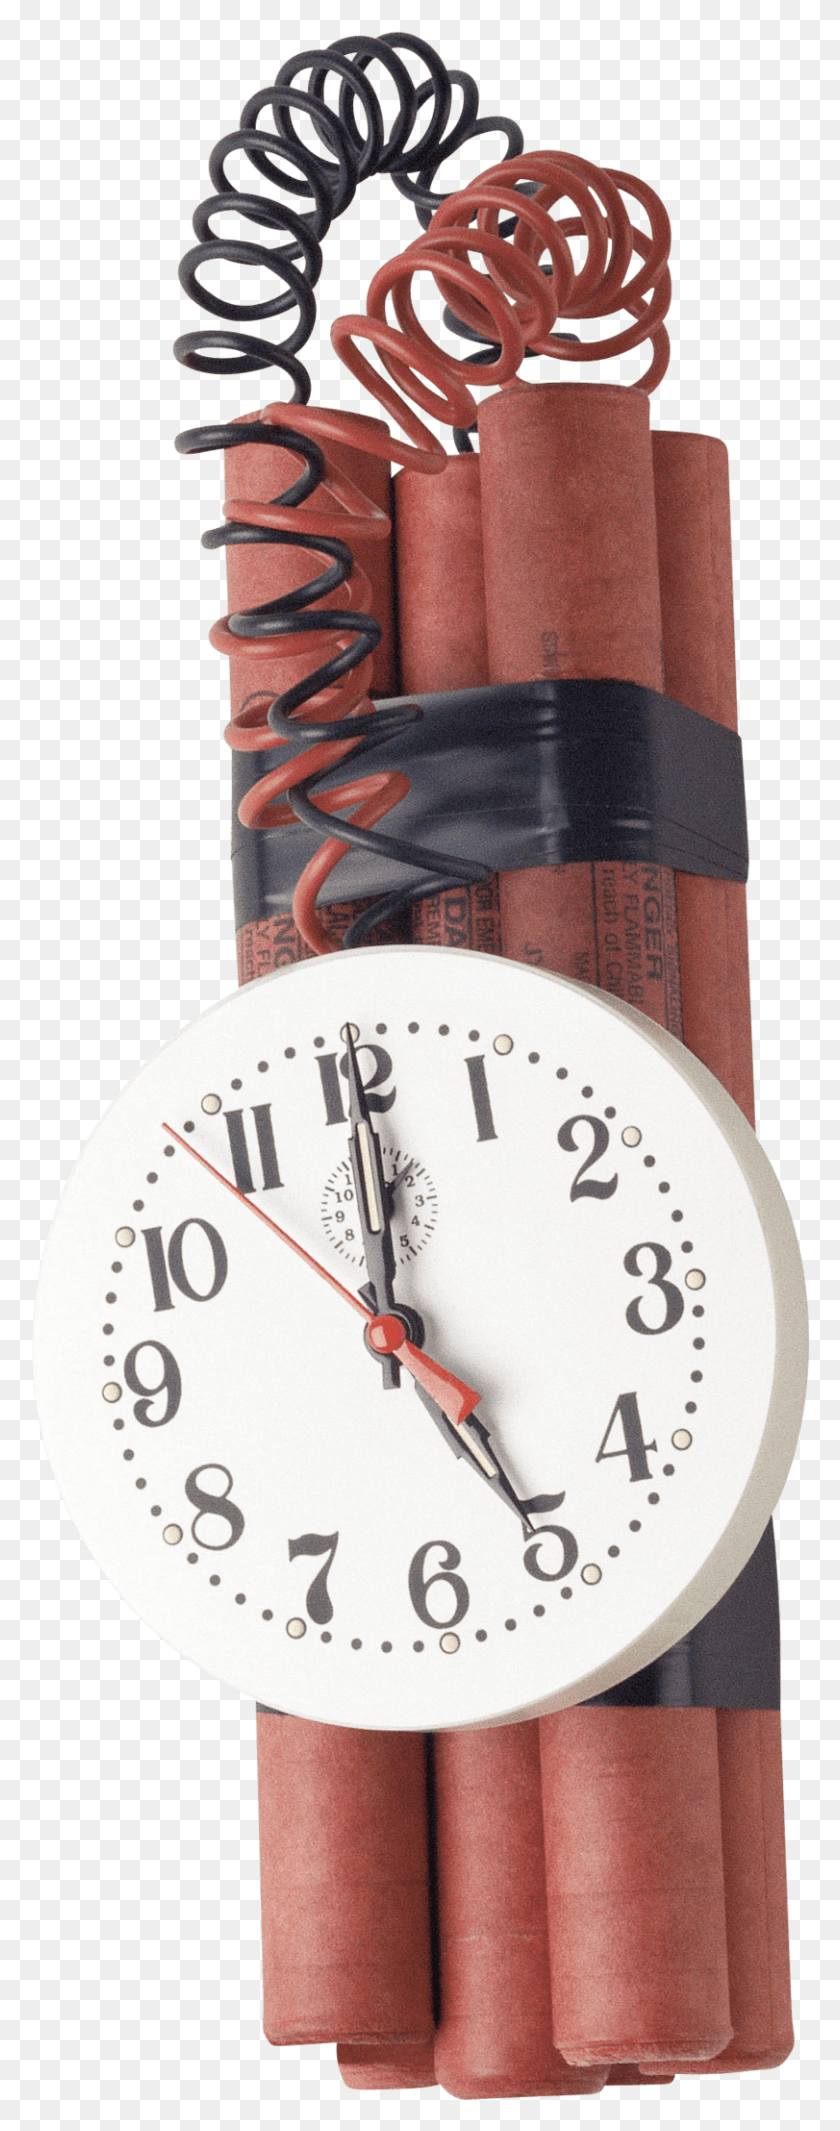 811x2154 Descargar Pngobjetos Bomba De Tiempo, Reloj Analógico, Reloj, Torre Del Reloj Hd Png